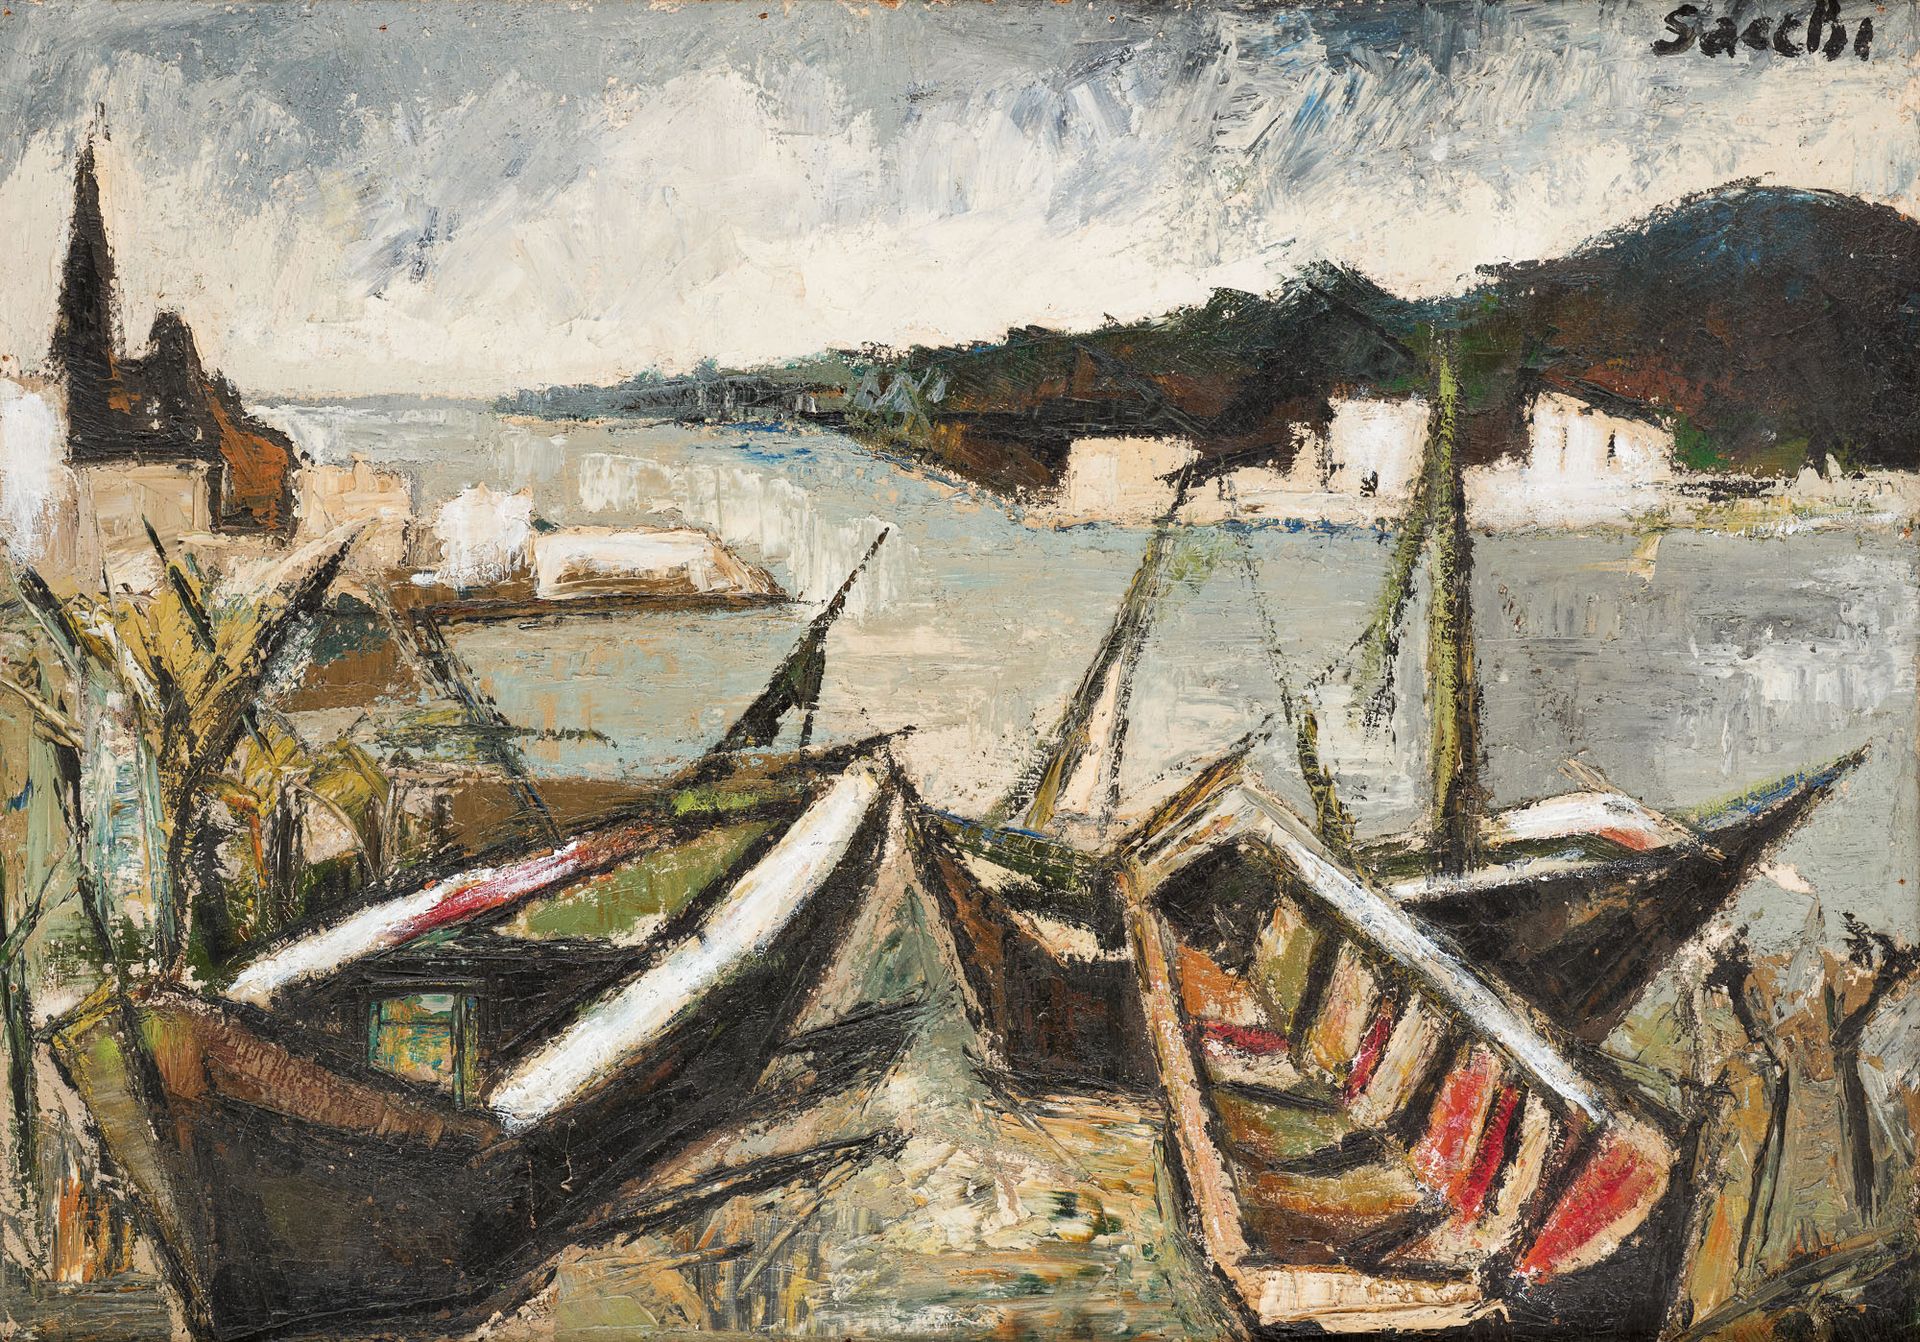 Sacchi (École italienne 20e) 布面油画：退潮时的港口。

签名：萨克奇。

尺寸：66 x 92厘米。